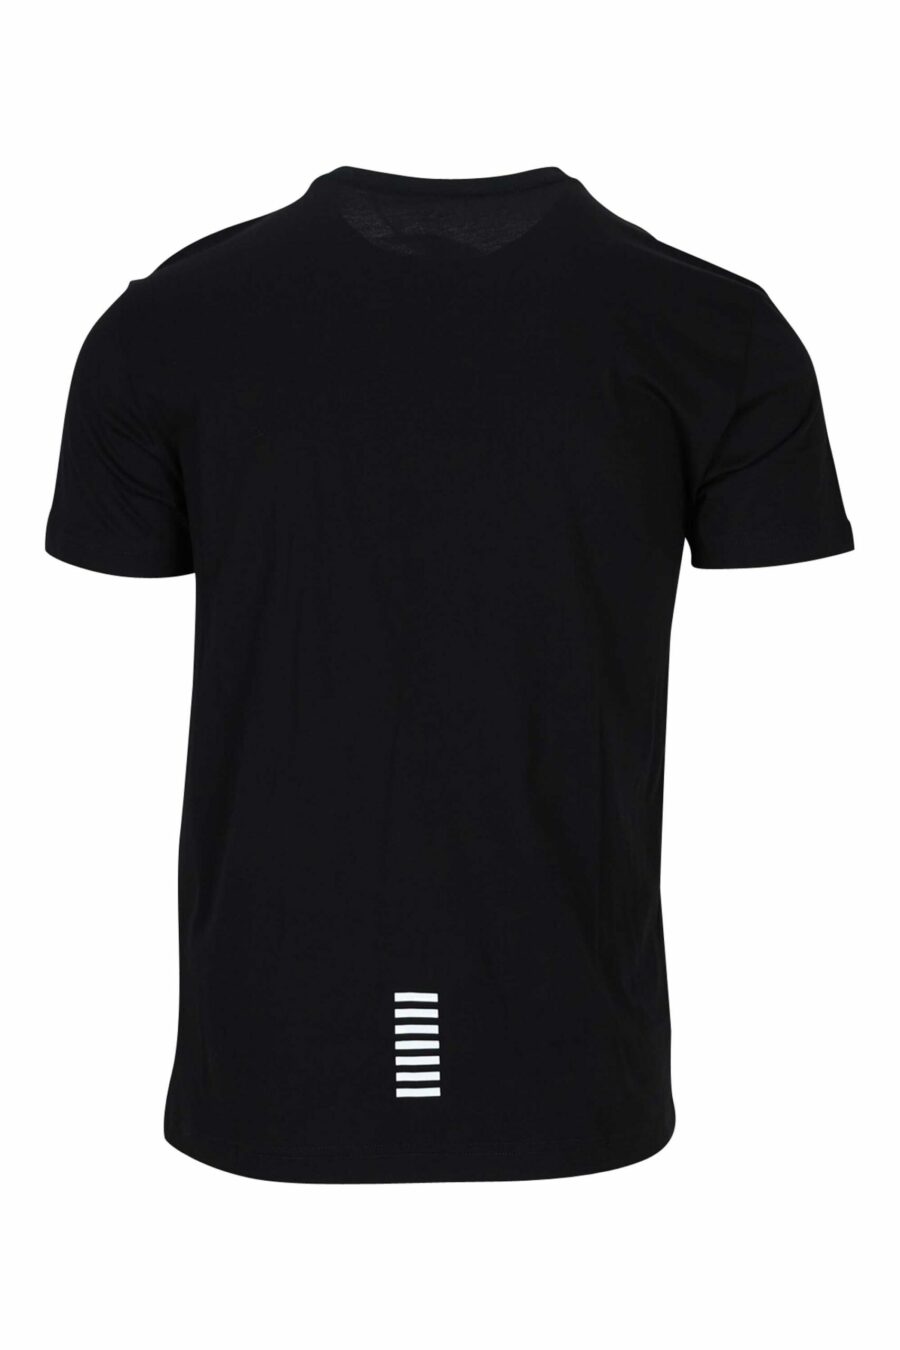 T-shirt preta com branco "lux identity" gradiente minilogue - 8055187167147 1 à escala